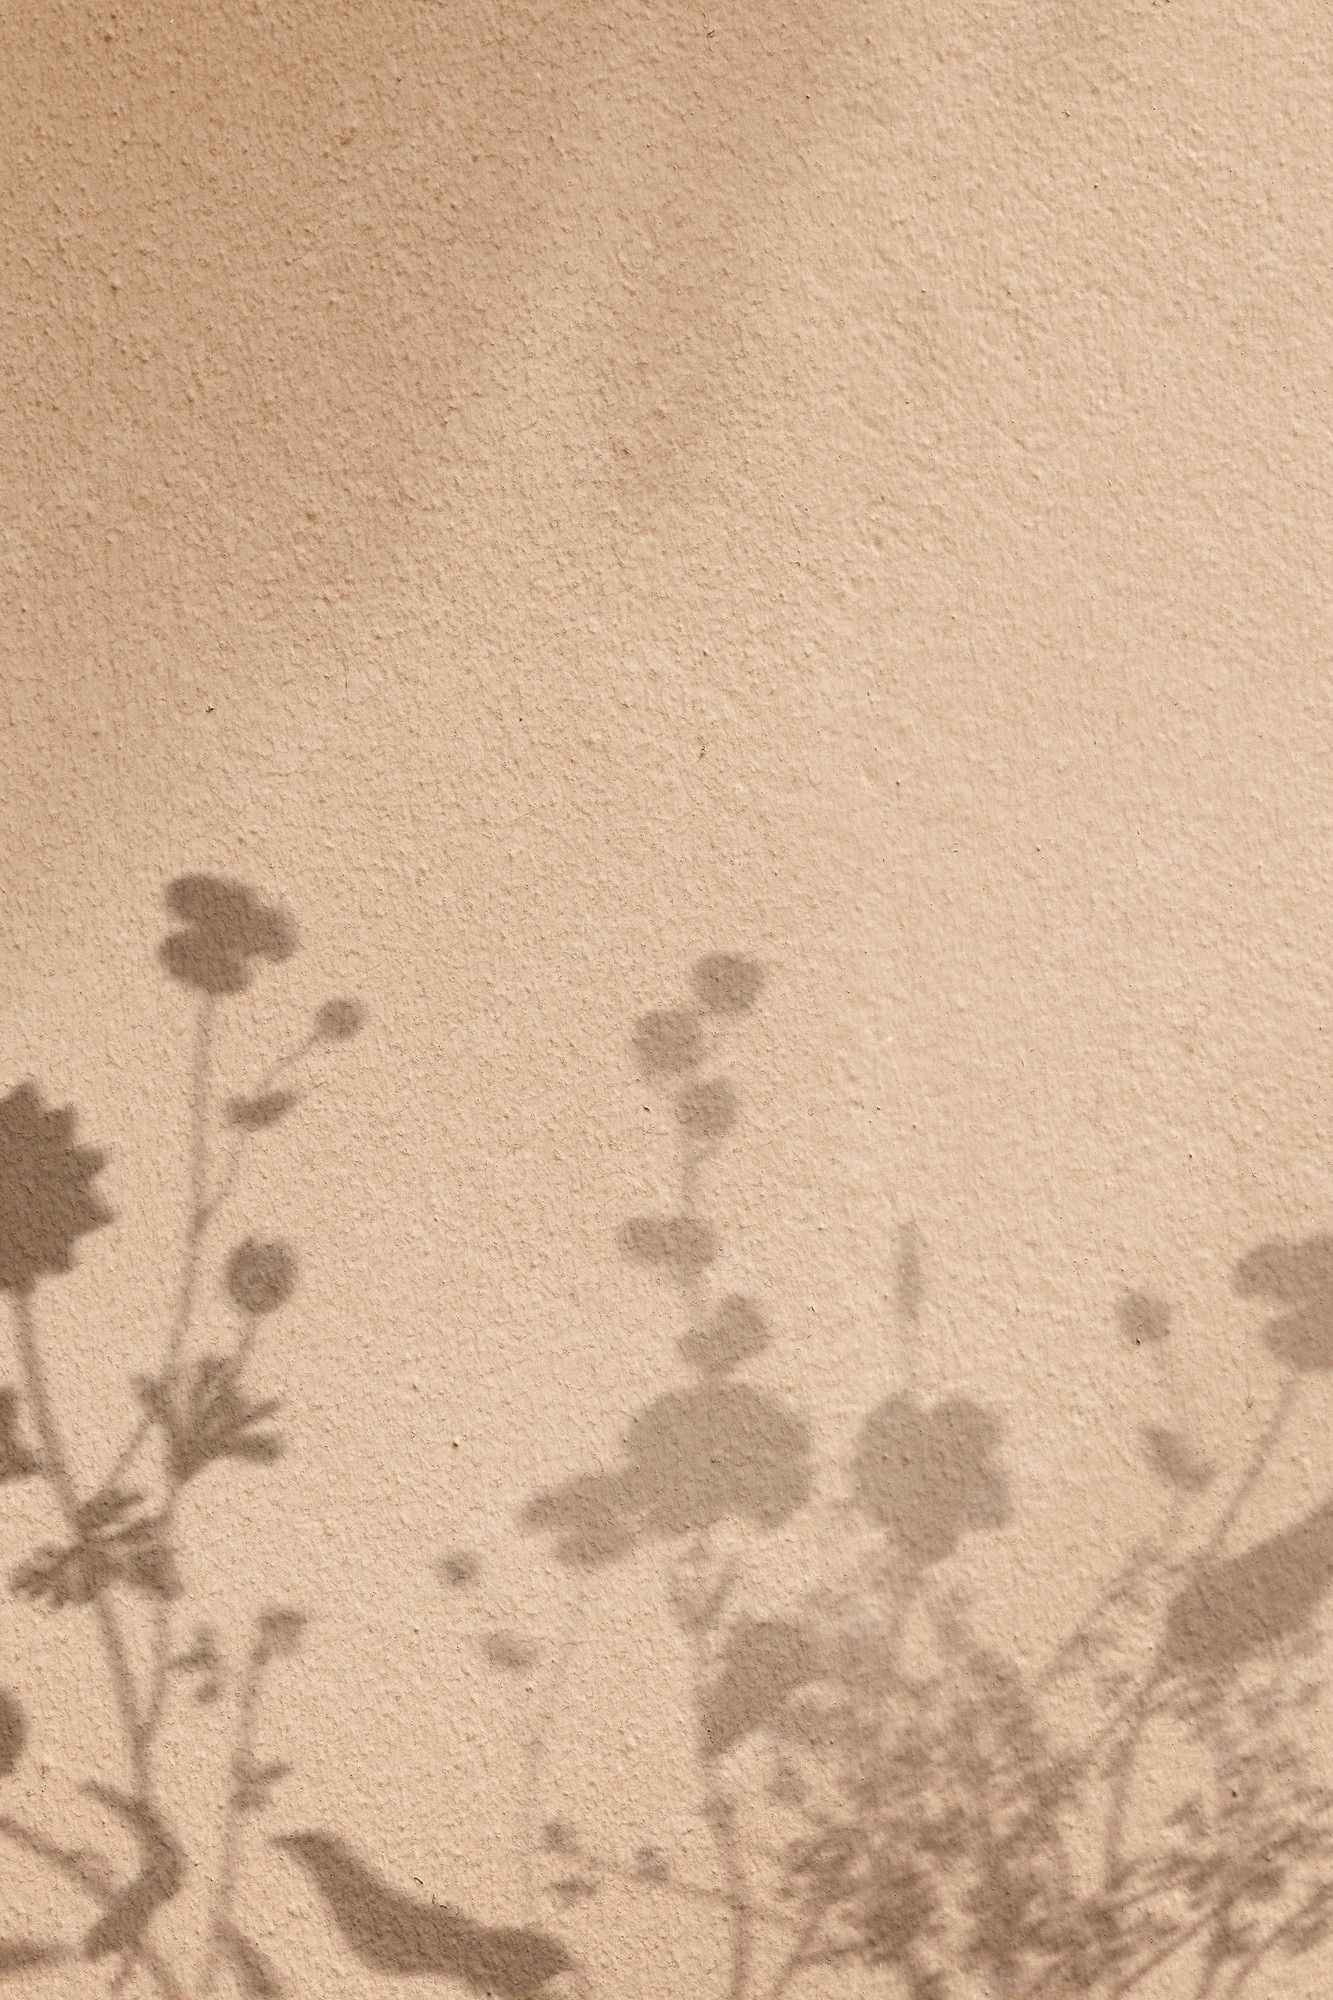 Flower Shadow Wallpaper Image